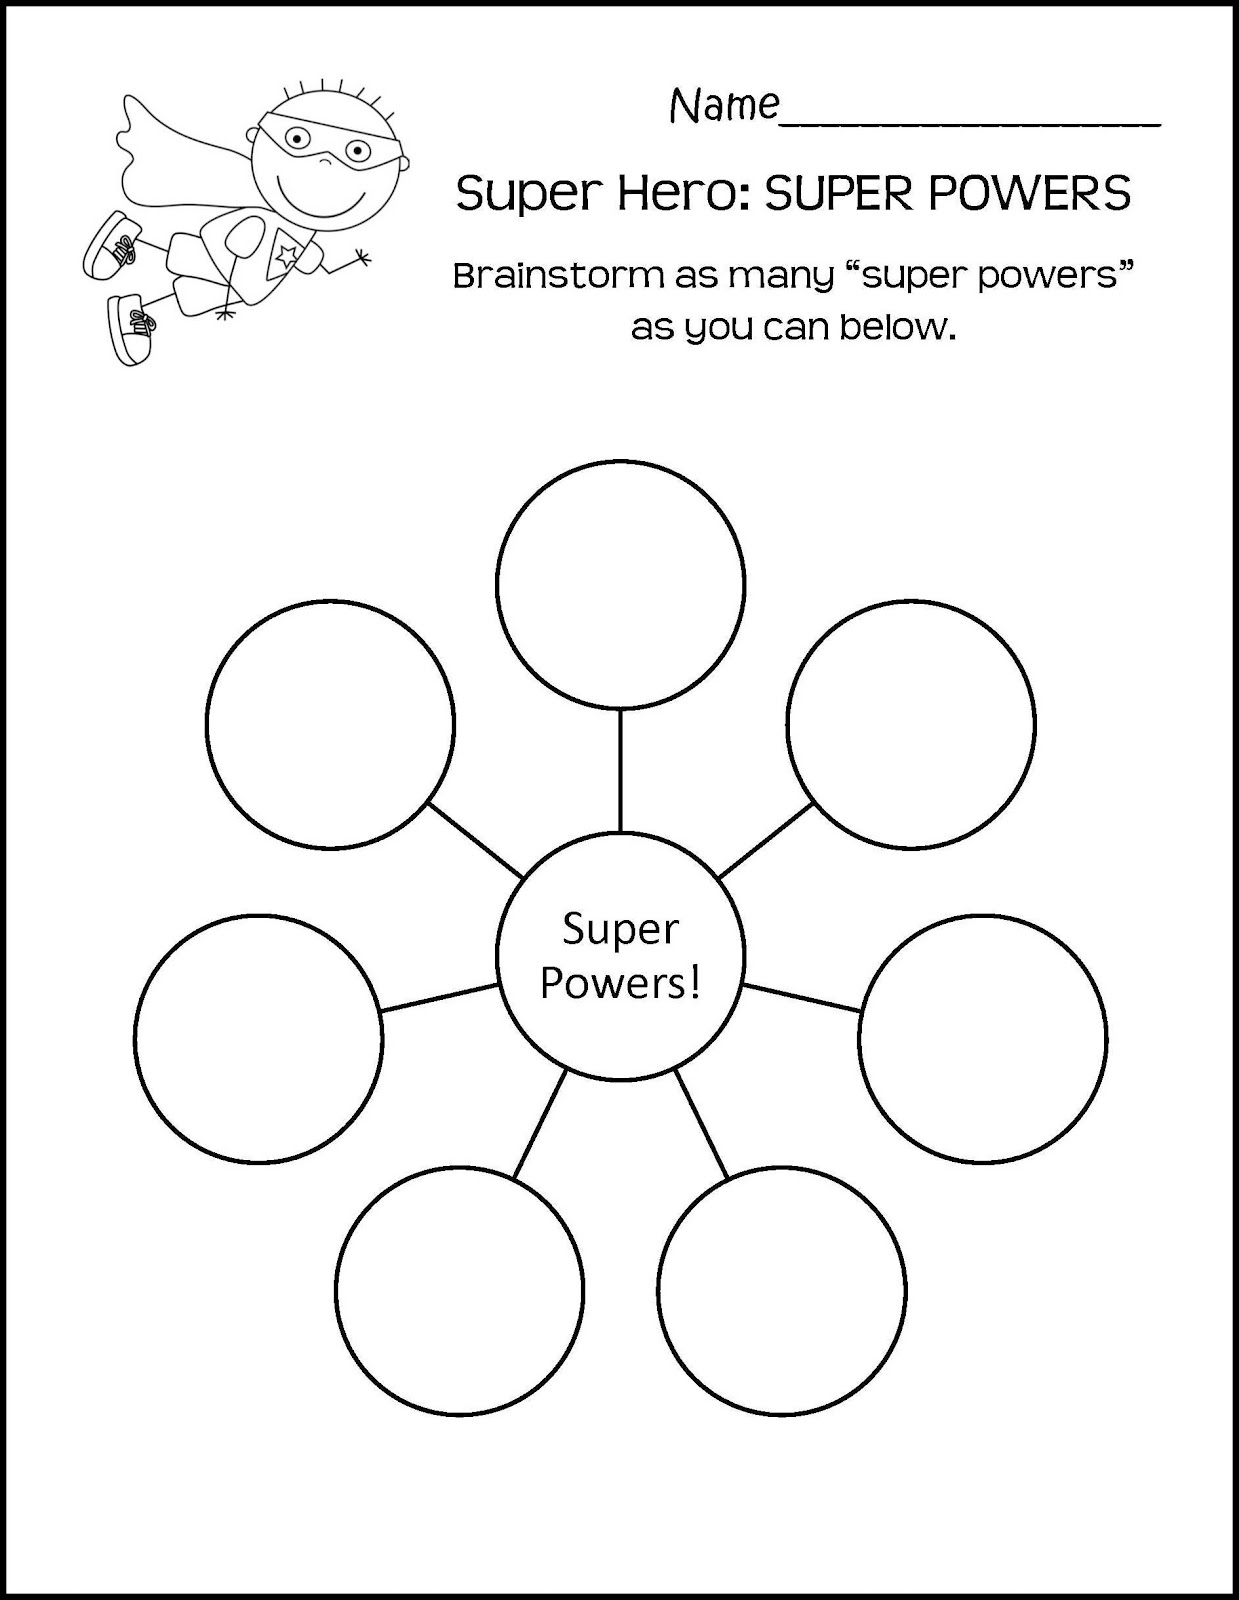 Essay having super powers